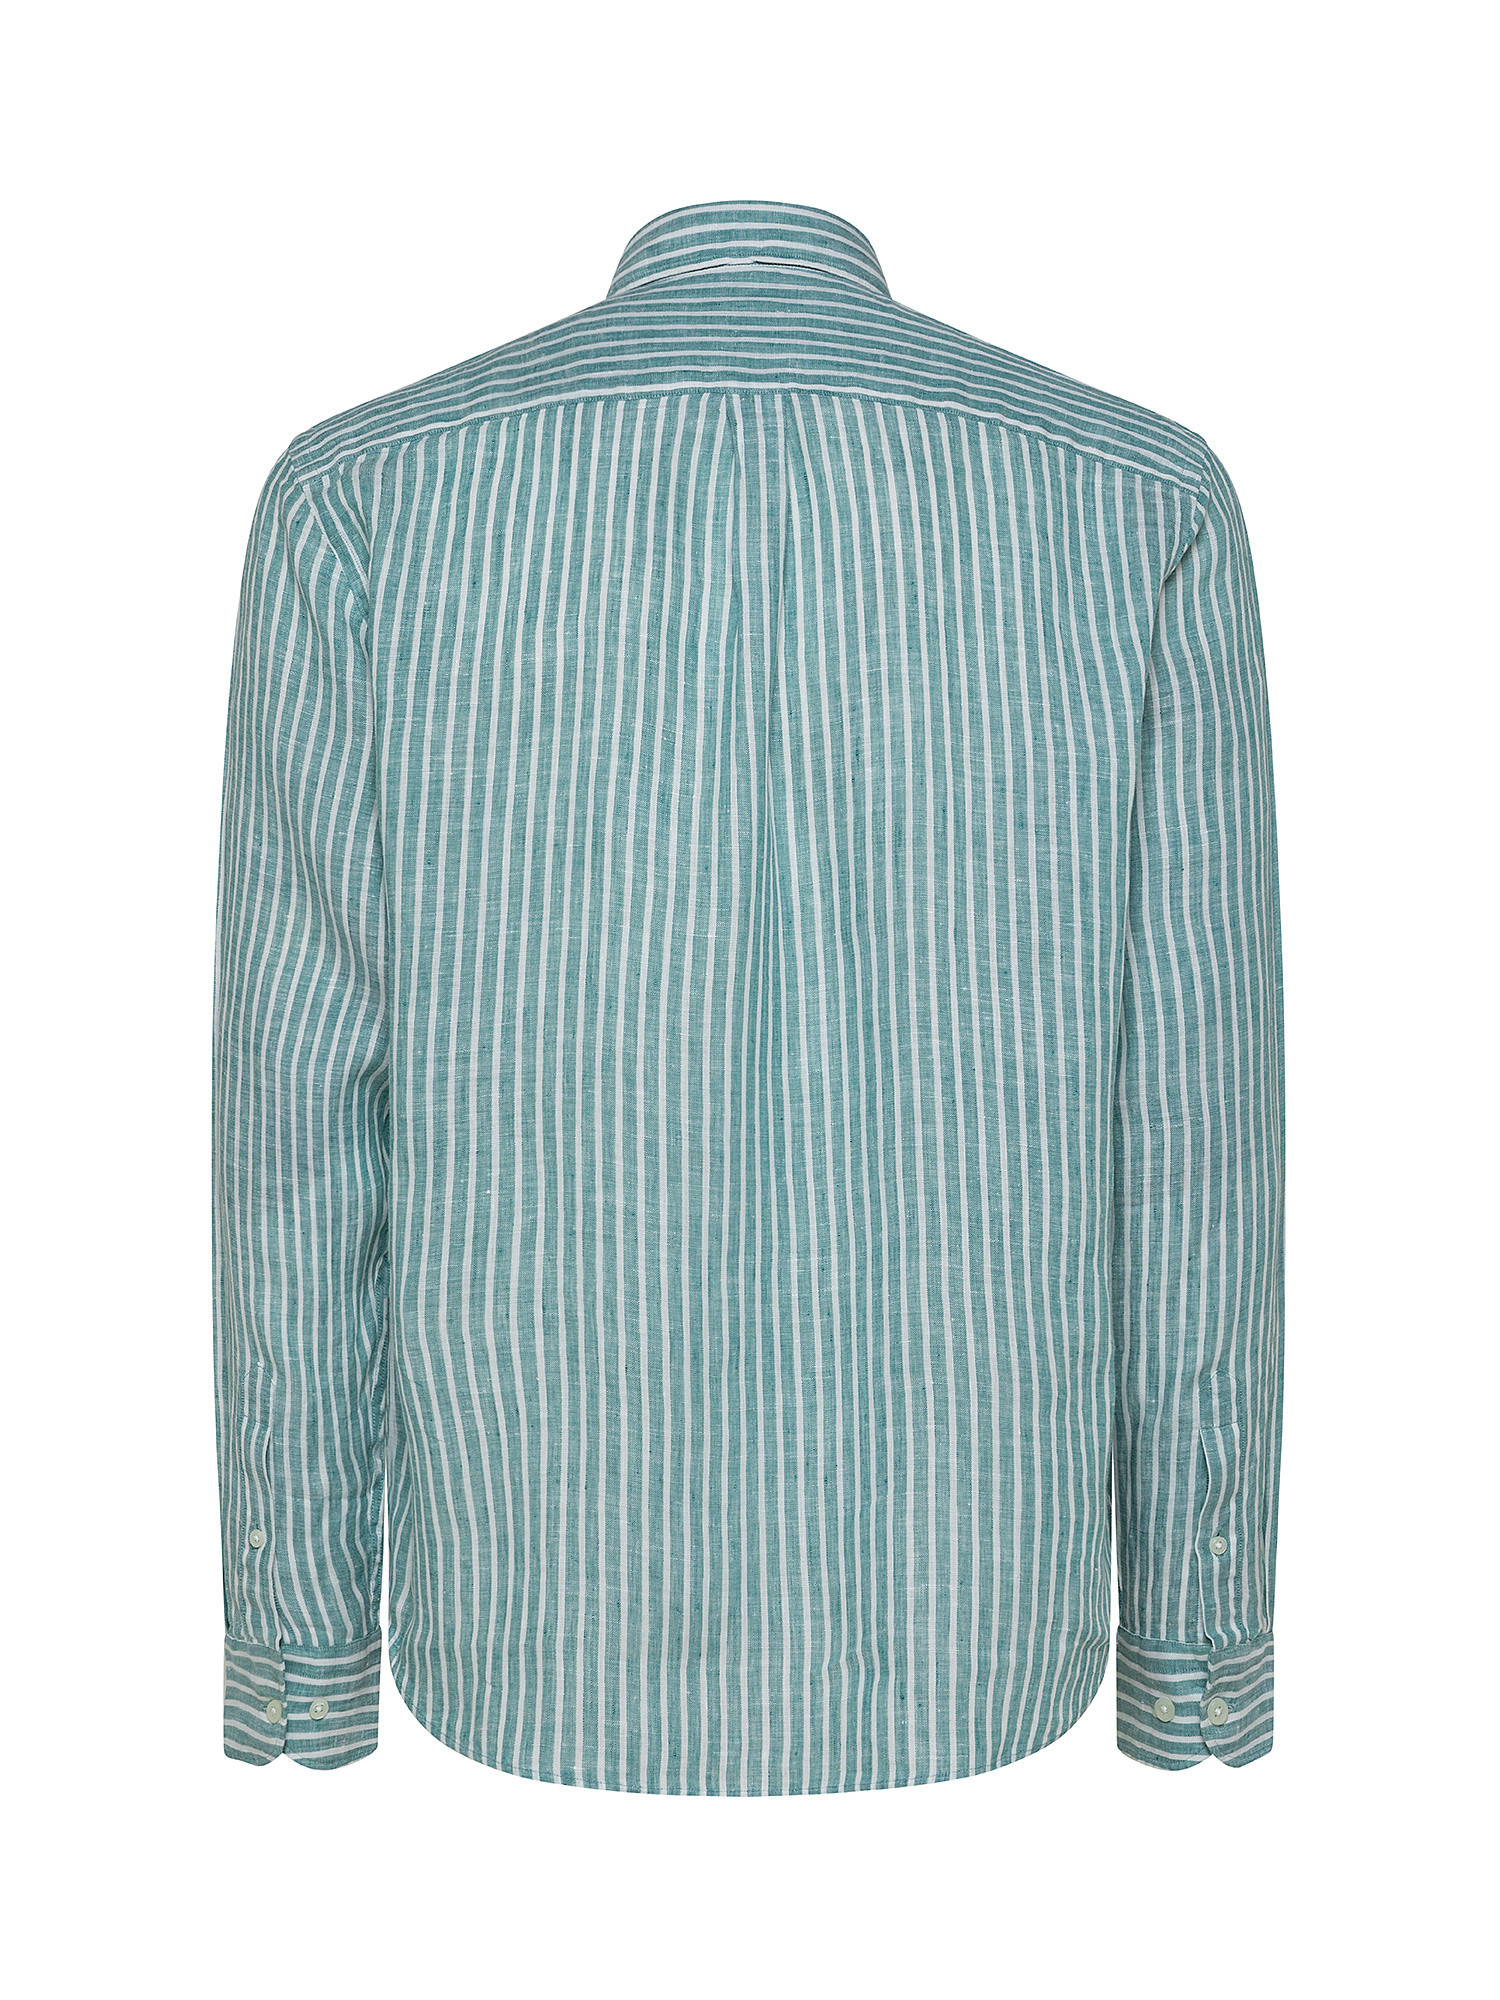 Striped linen shirt, Green, large image number 1